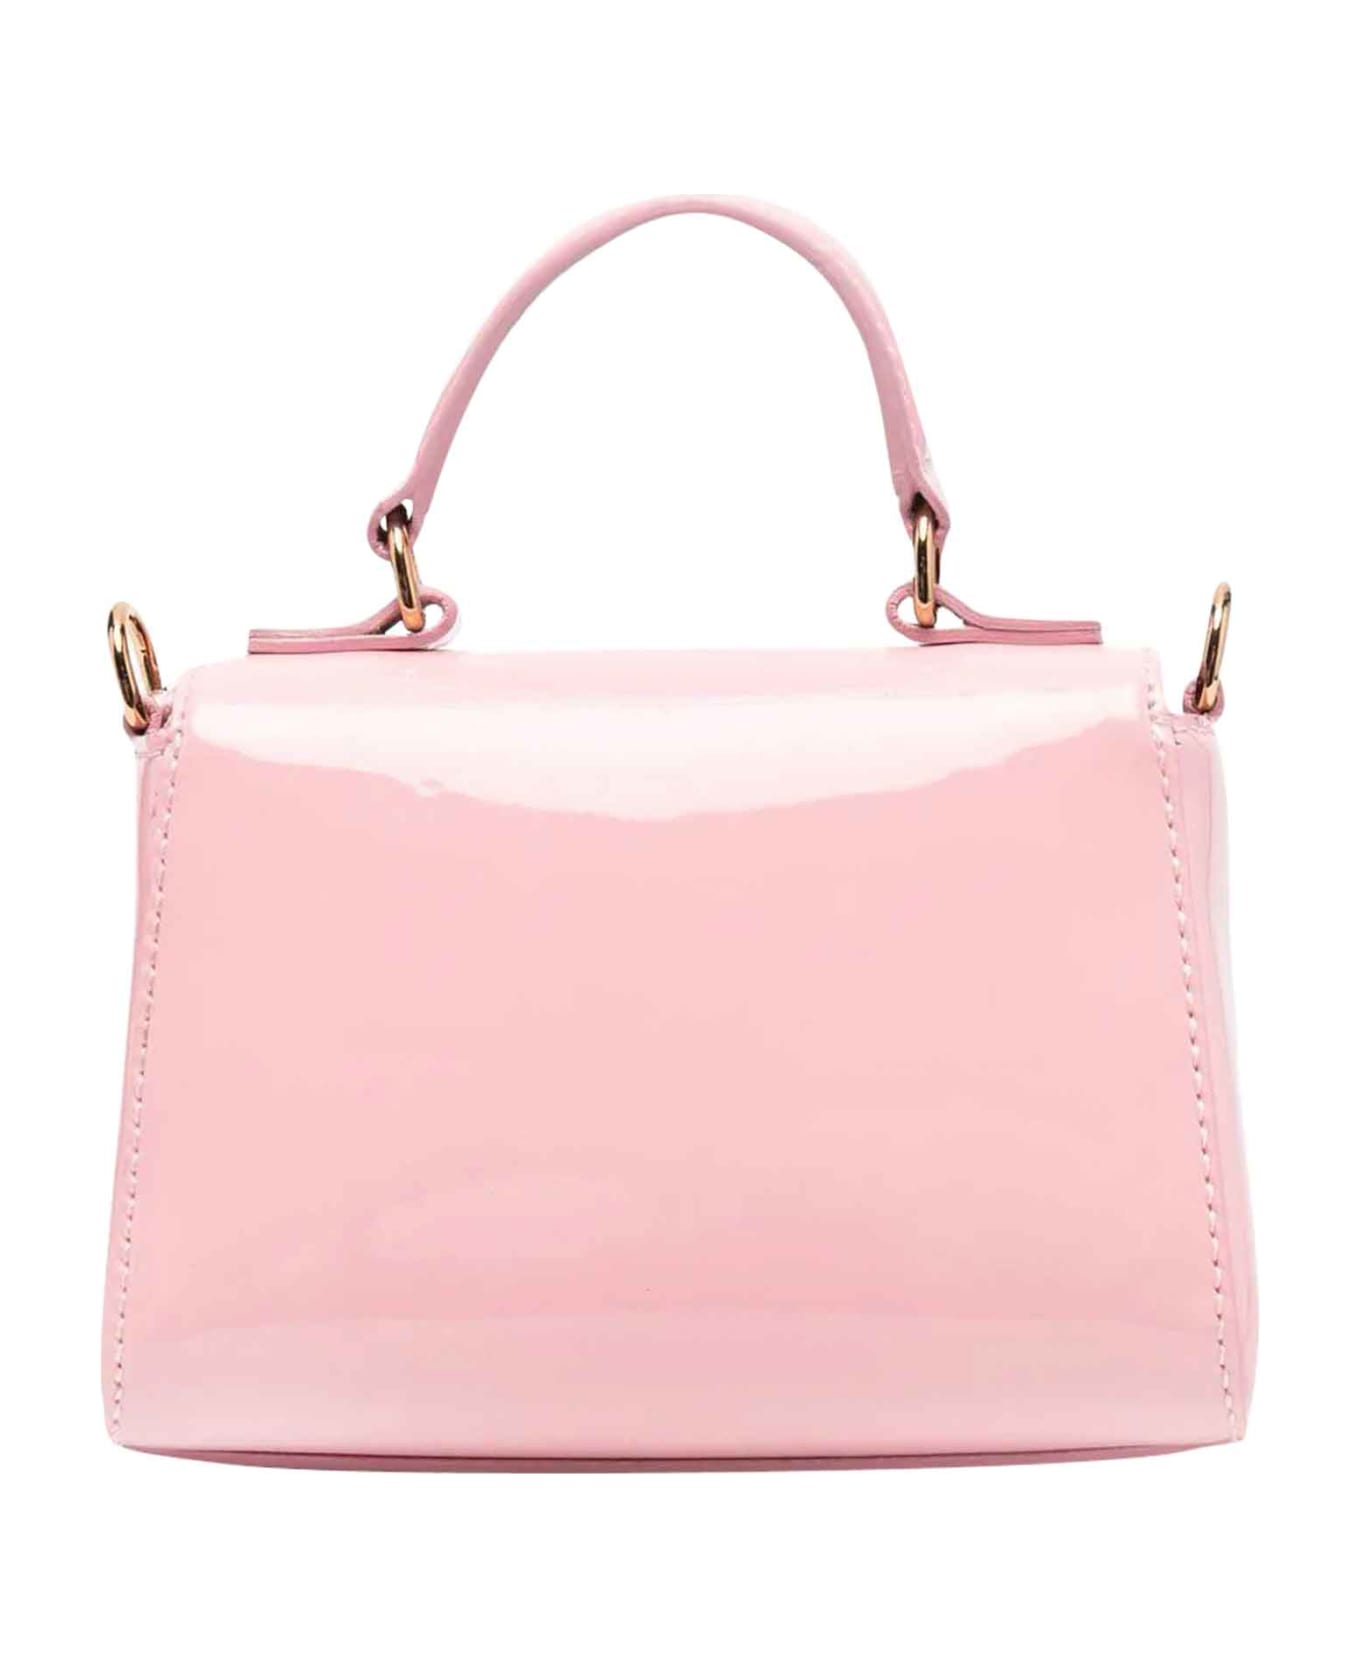 Versace Pink Bag Girl Kids - Rosa/oro